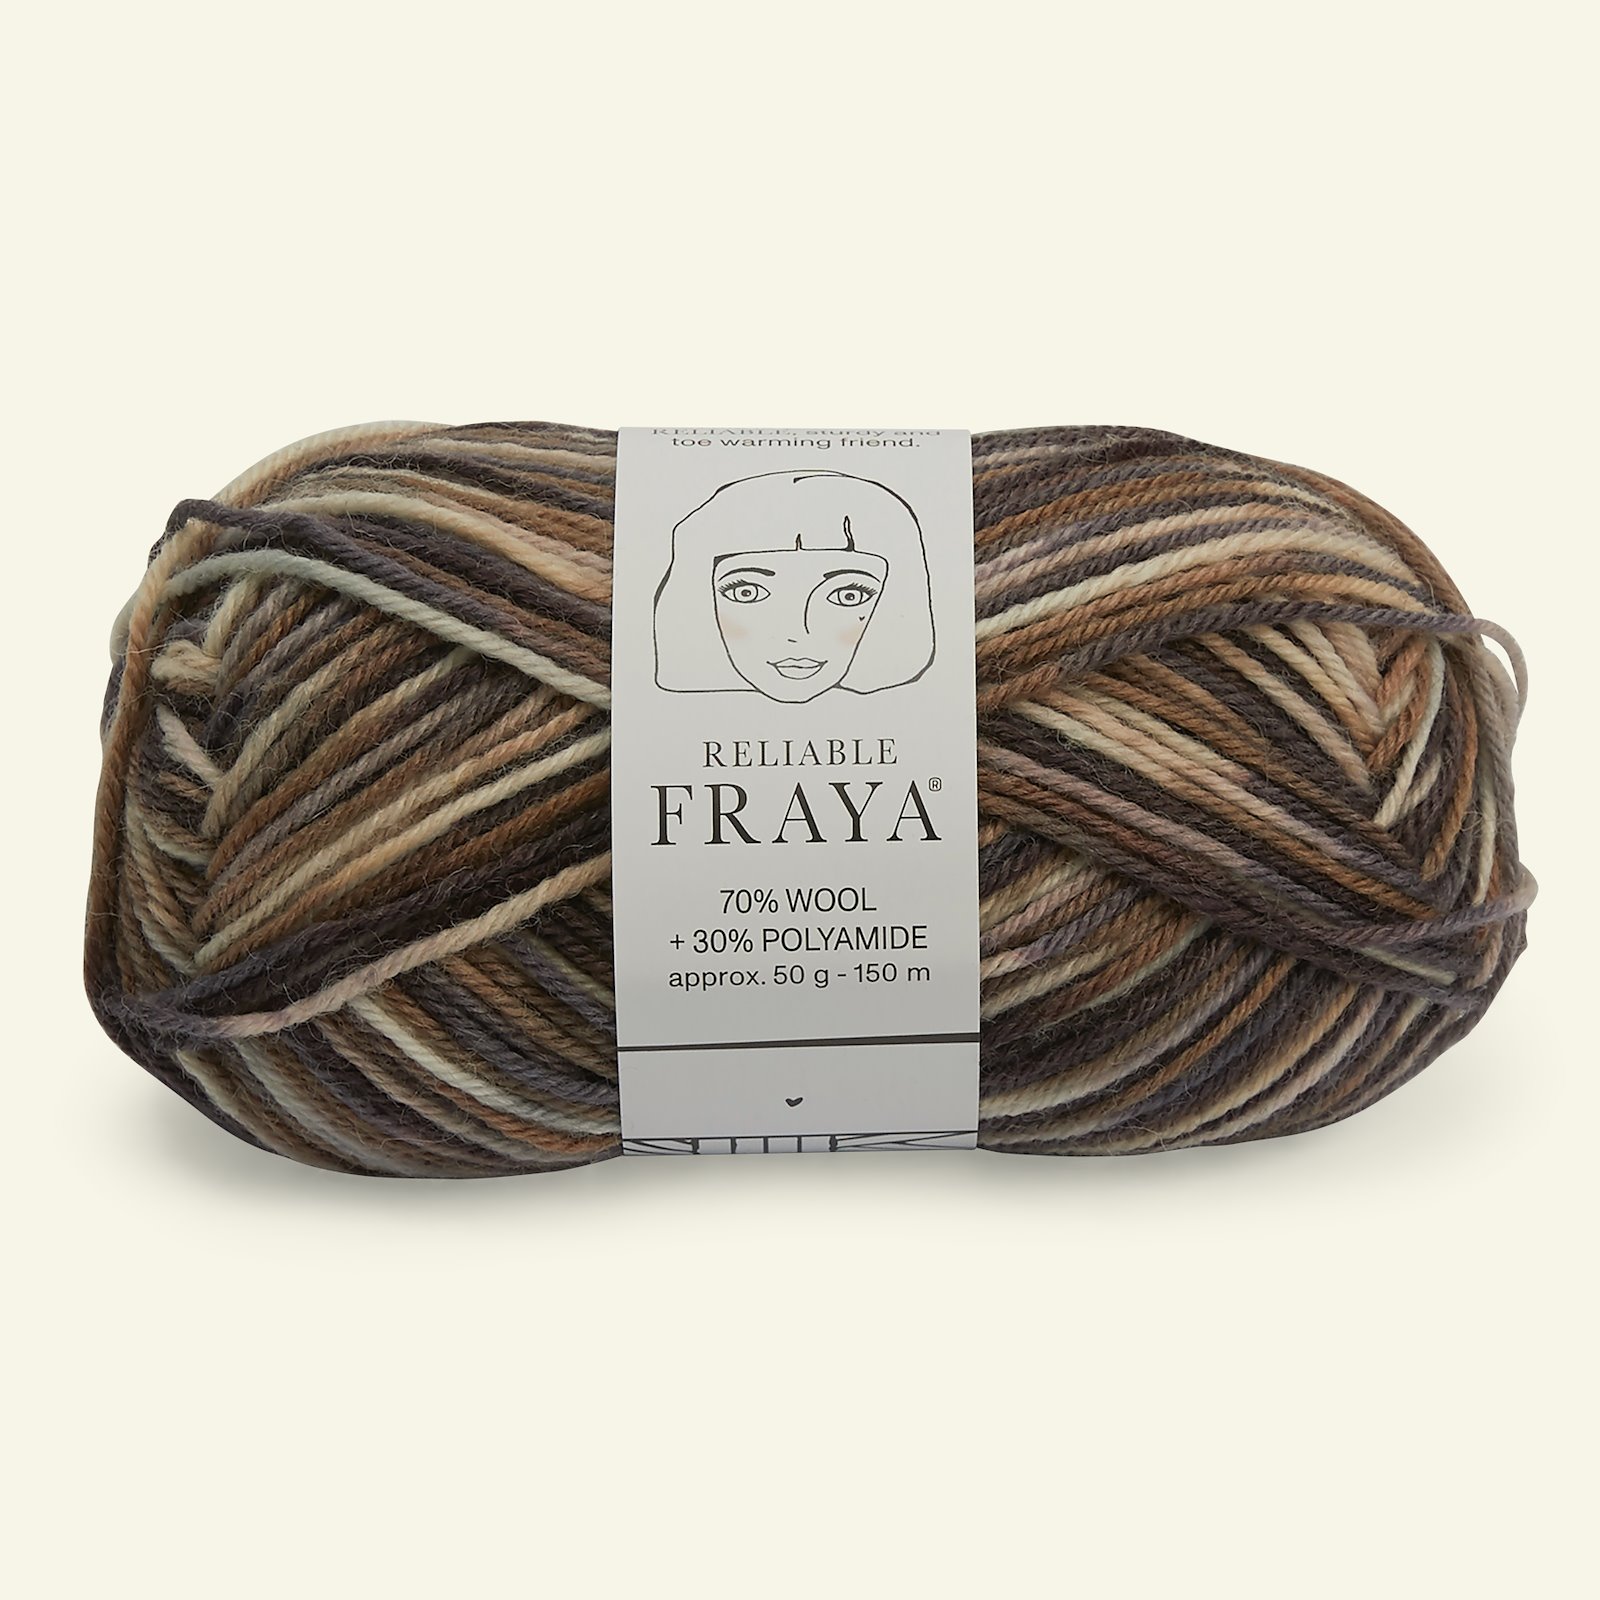 FRAYA, wool yarn "Reliable", brown /begie mix col. 90001192_pack